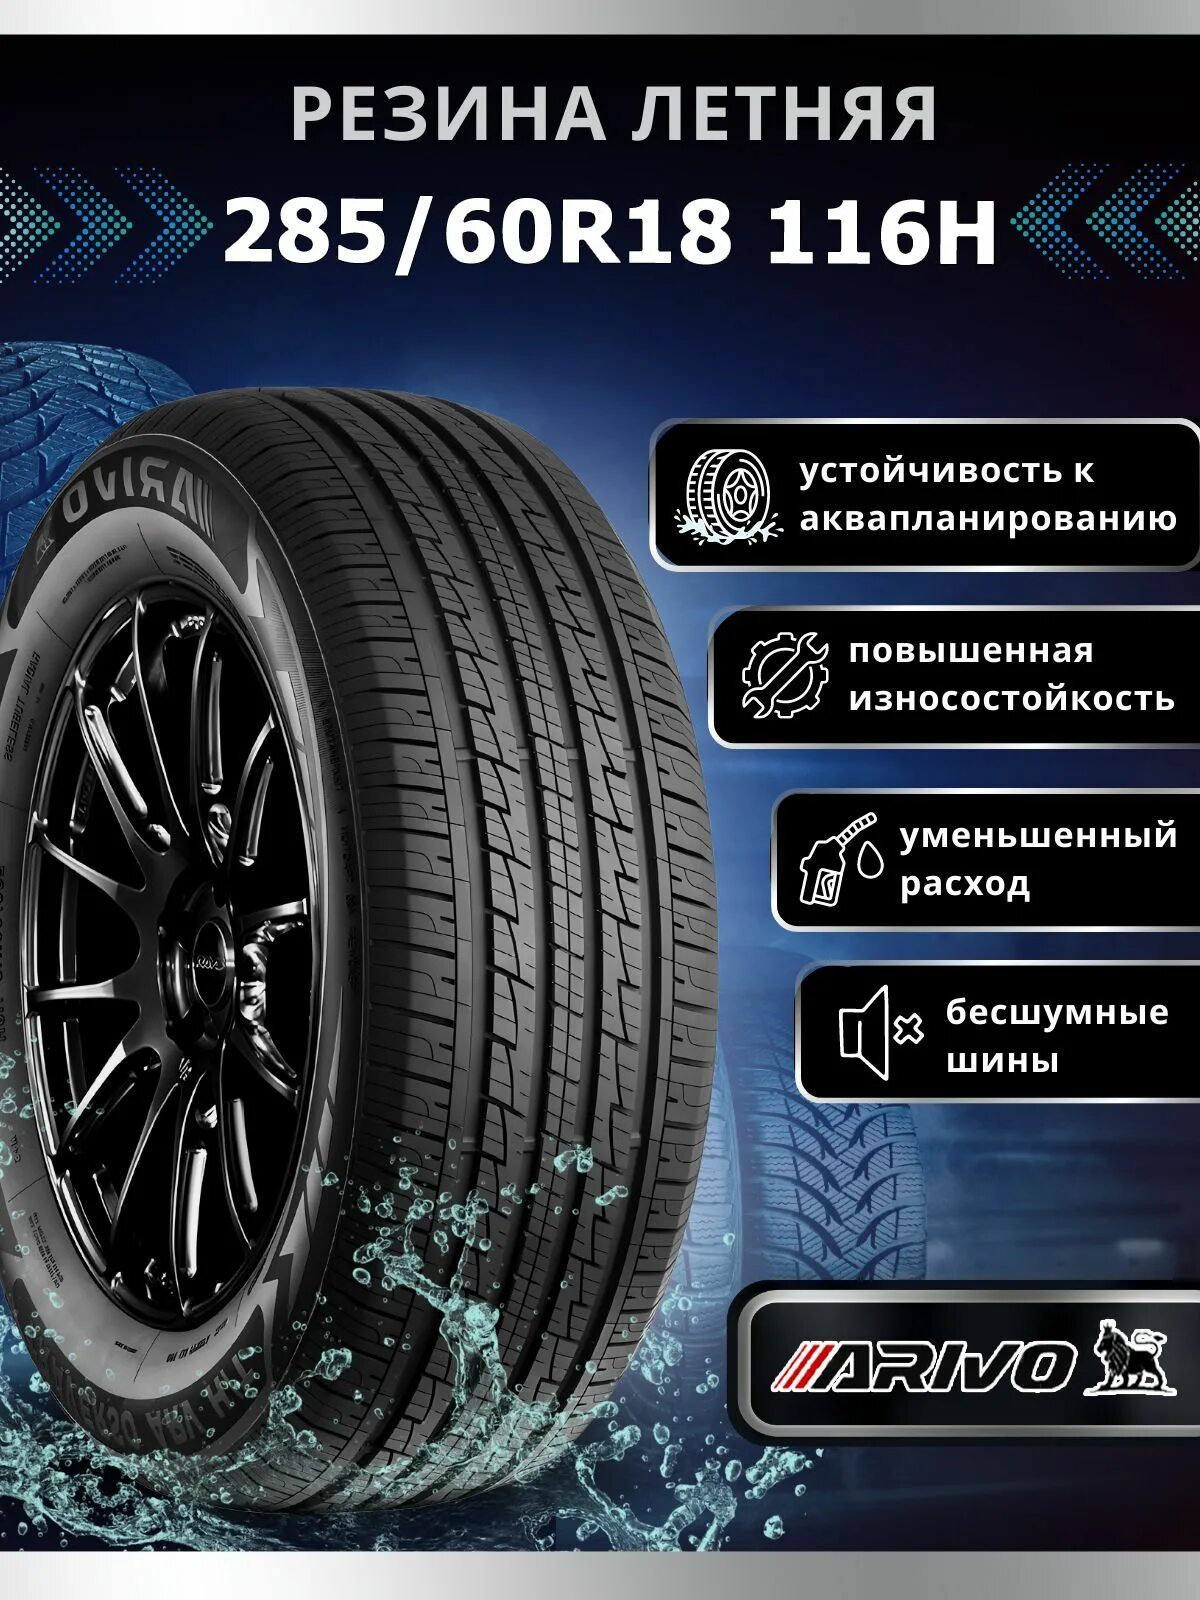 Arivo arz5 шины отзывы. 215/70r16 100h arivo Terrano arv h/t. Arivo Ultra arz5 шина. Авторезина интернет магазин. Шины Doublestar 245/55/19 t 103 dw02.